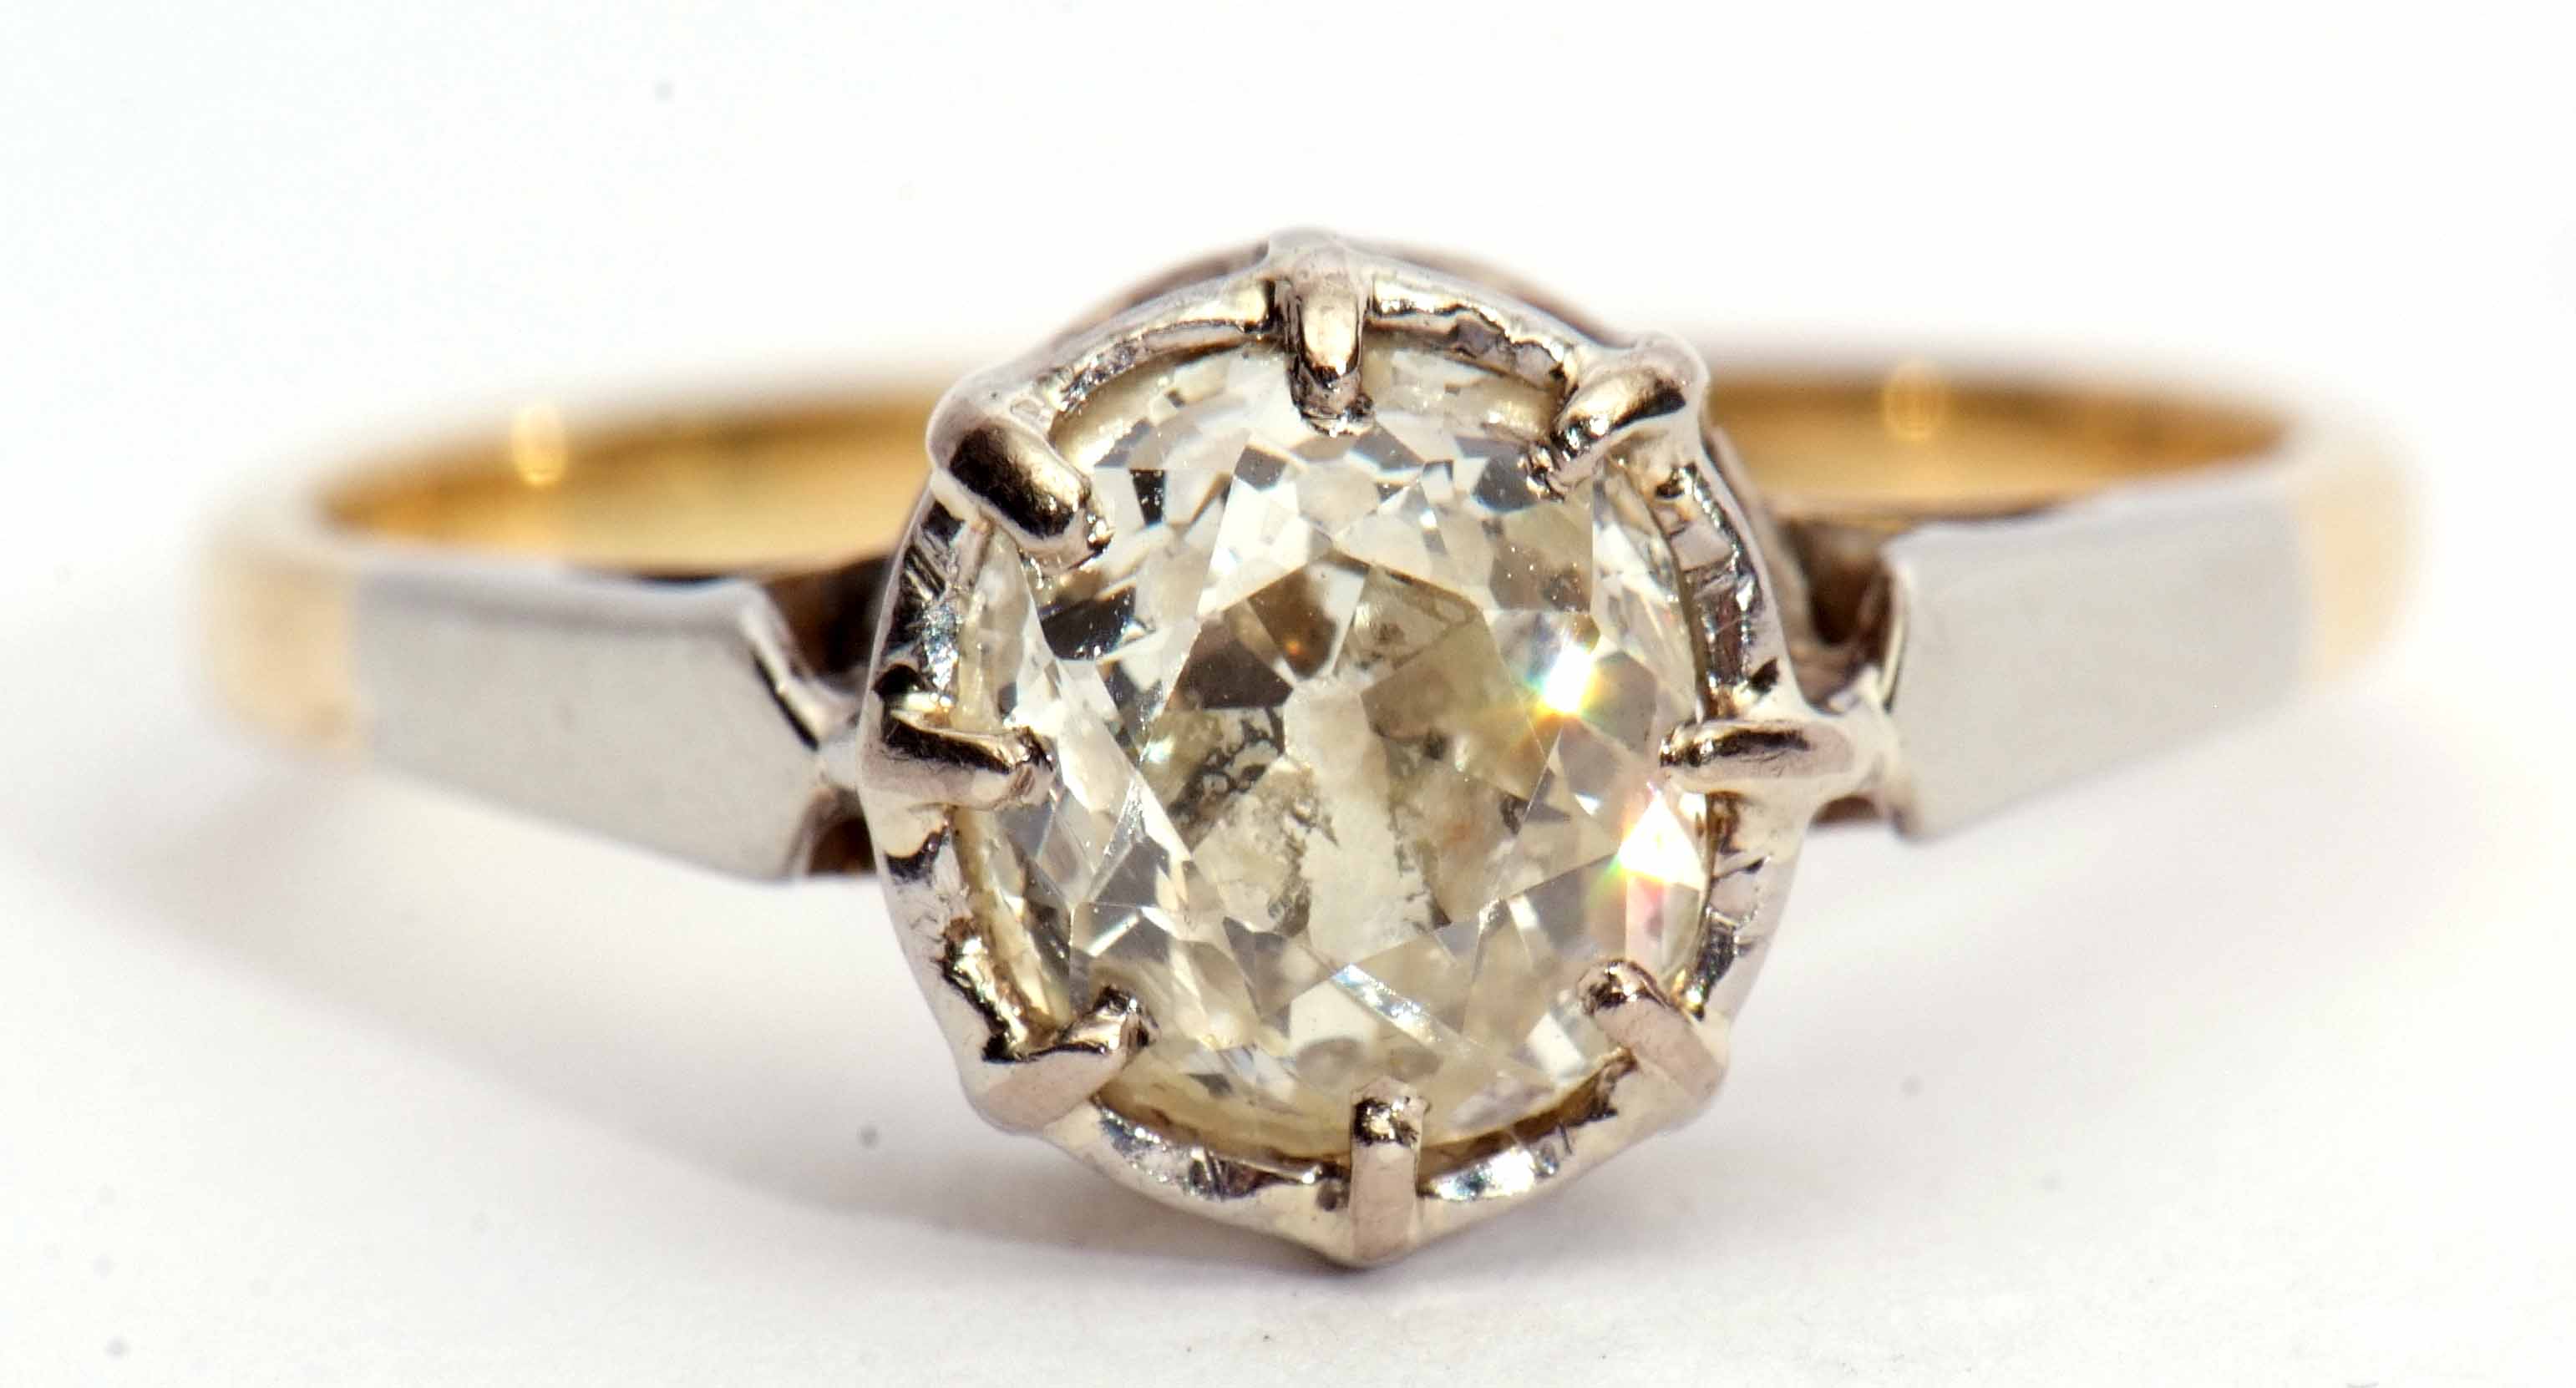 Precious metal single stone diamond ring, the old cut diamond 0.50ct approx, claw set and raised